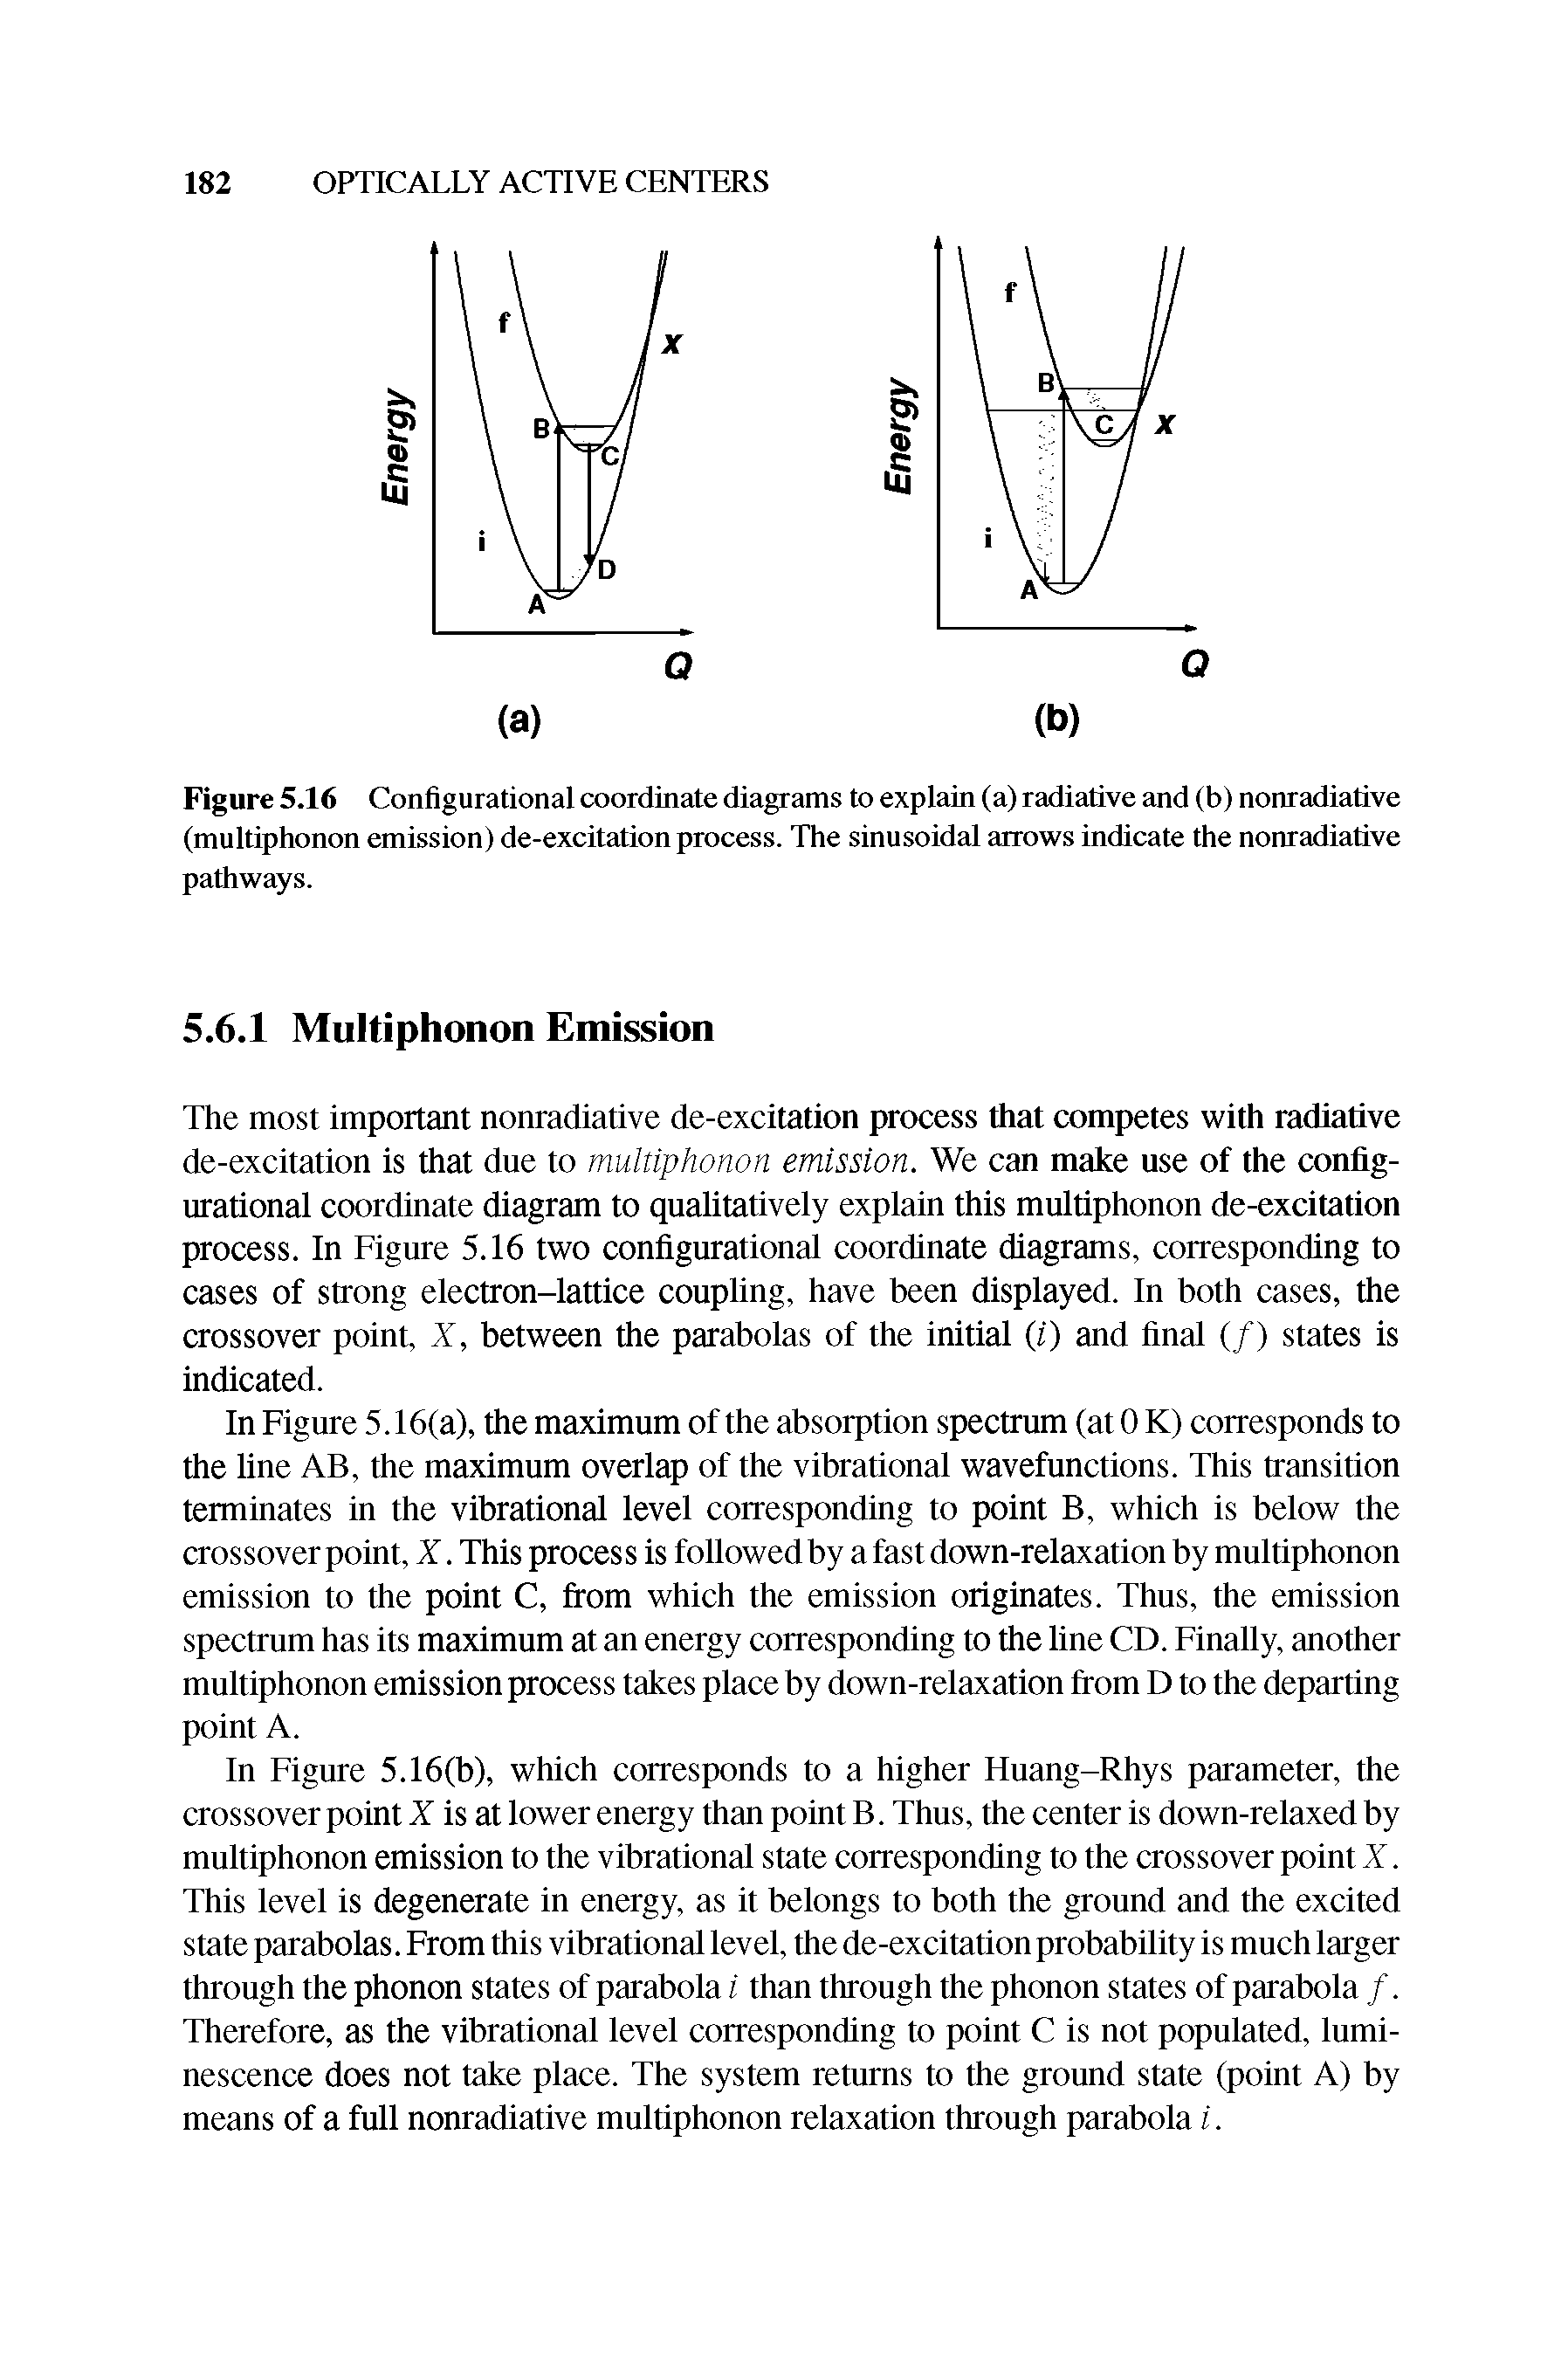 Figure 5.16 Configurational coordinate diagrams to explain (a) radiative and (b) nonradiative (multiphonon emission) de-excitation process. The sinusoidal arrows indicate the nonradiative pathways.